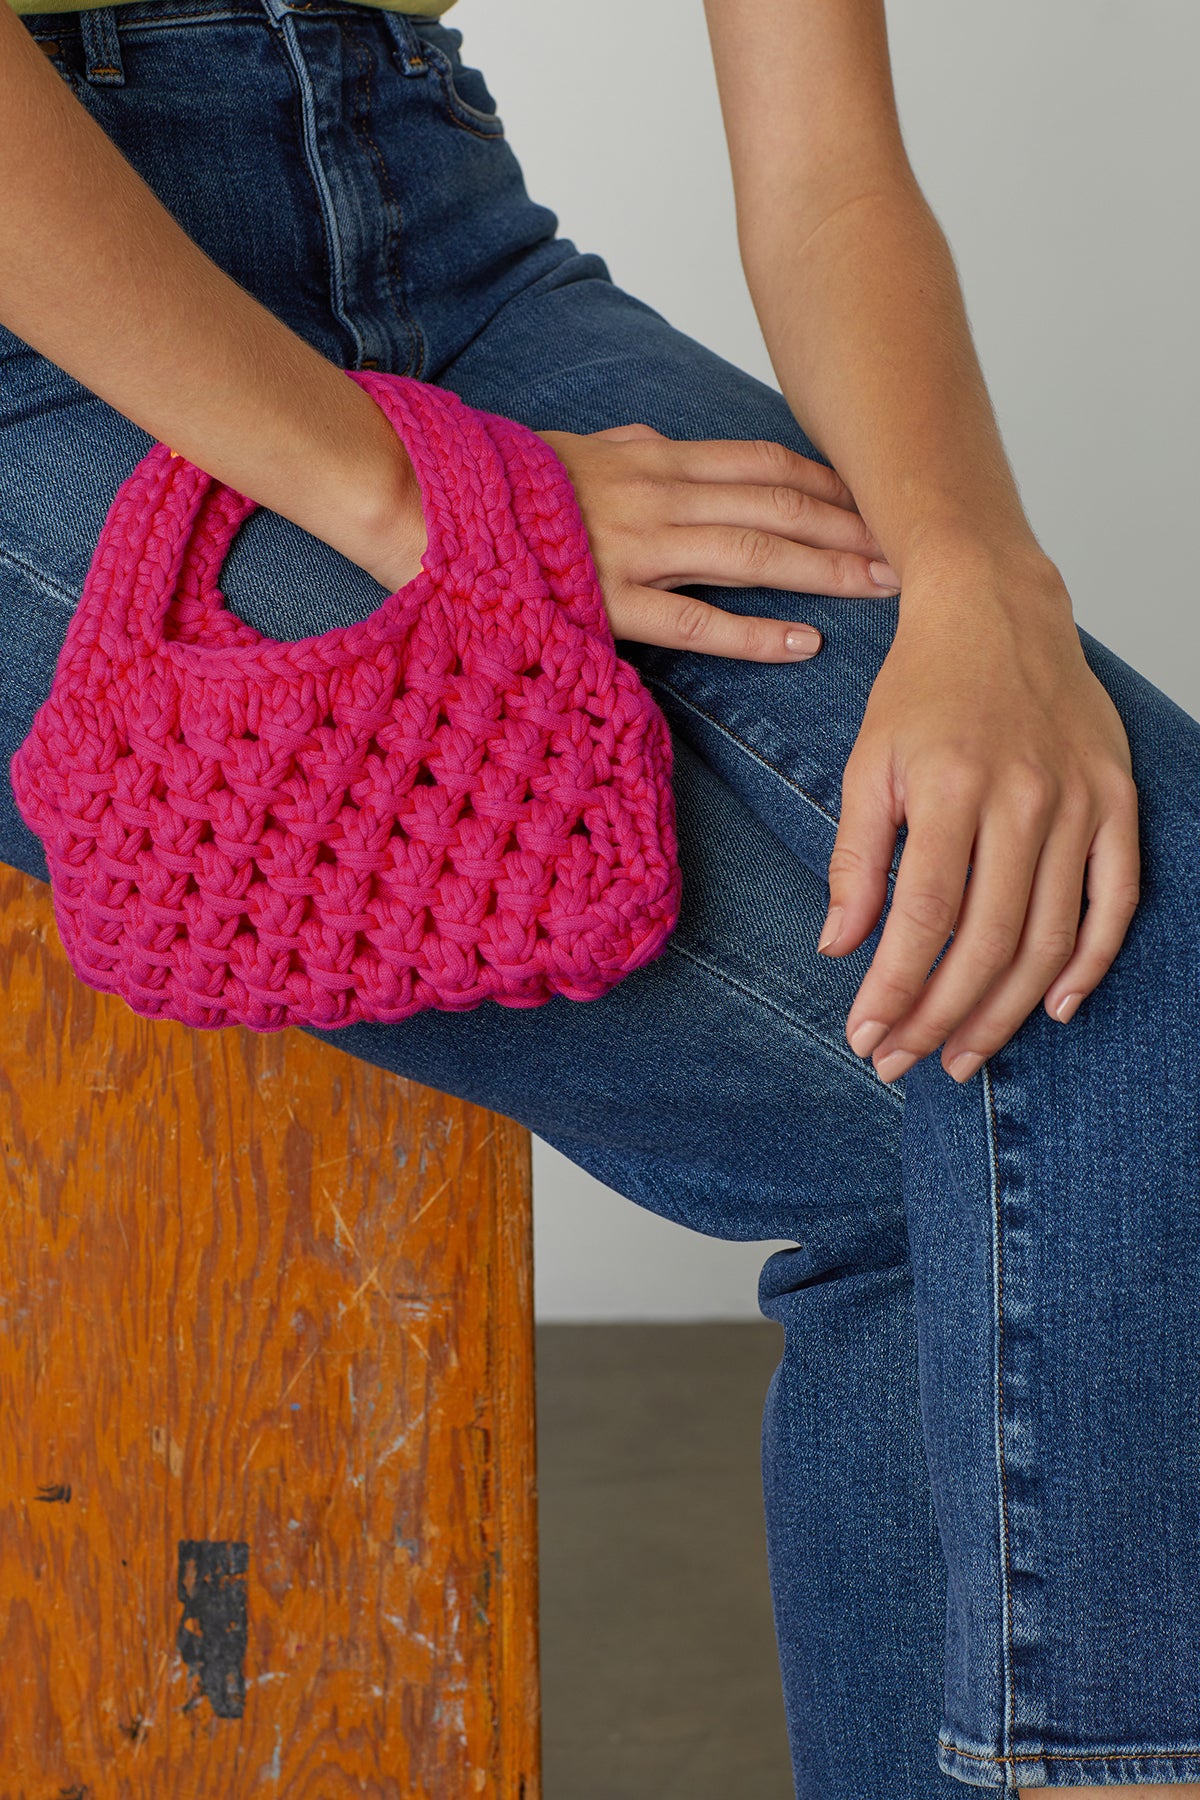 Bennie Crochet Bag in magenta pink on model's wrist-25156648992961